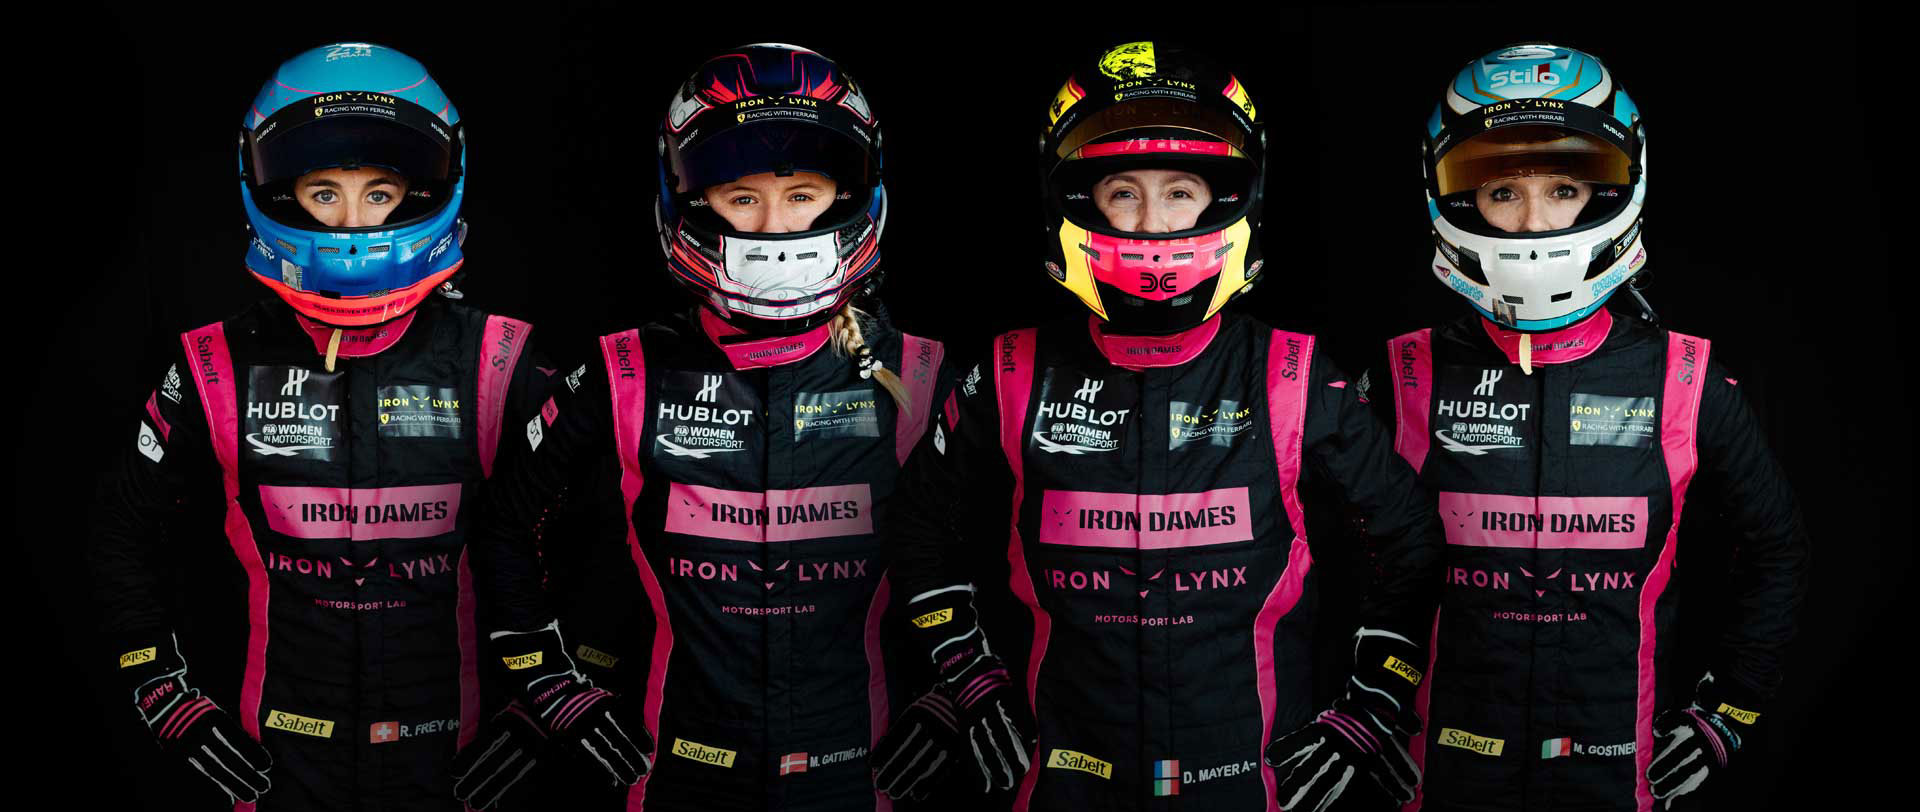 All-Female Team Making Mark in Motorsports